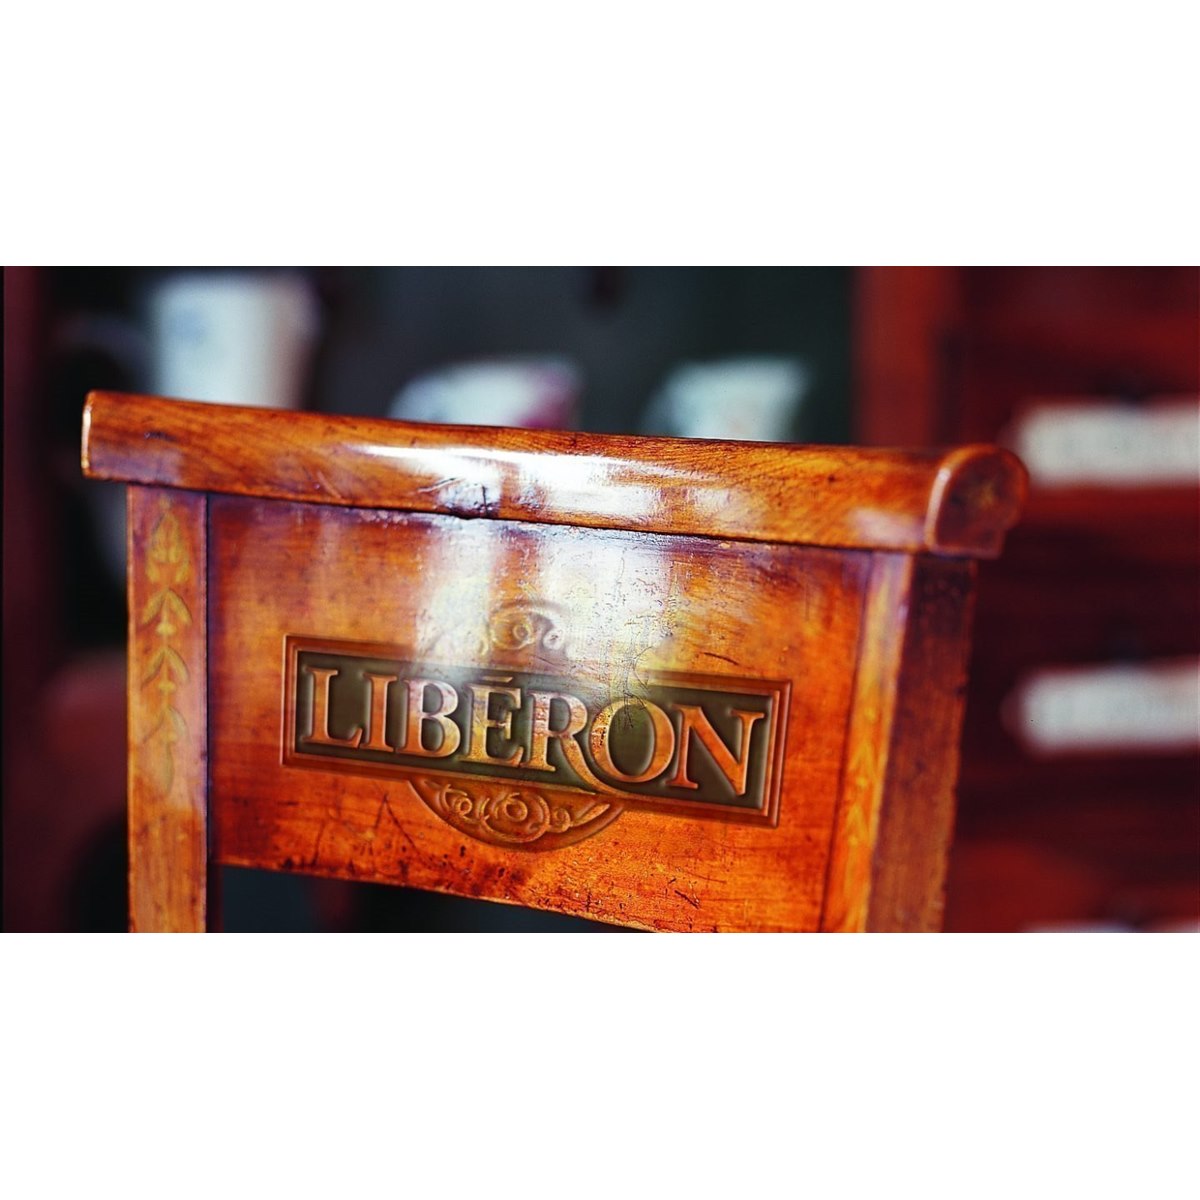 Where to buy Liberon Gilt Cream Online